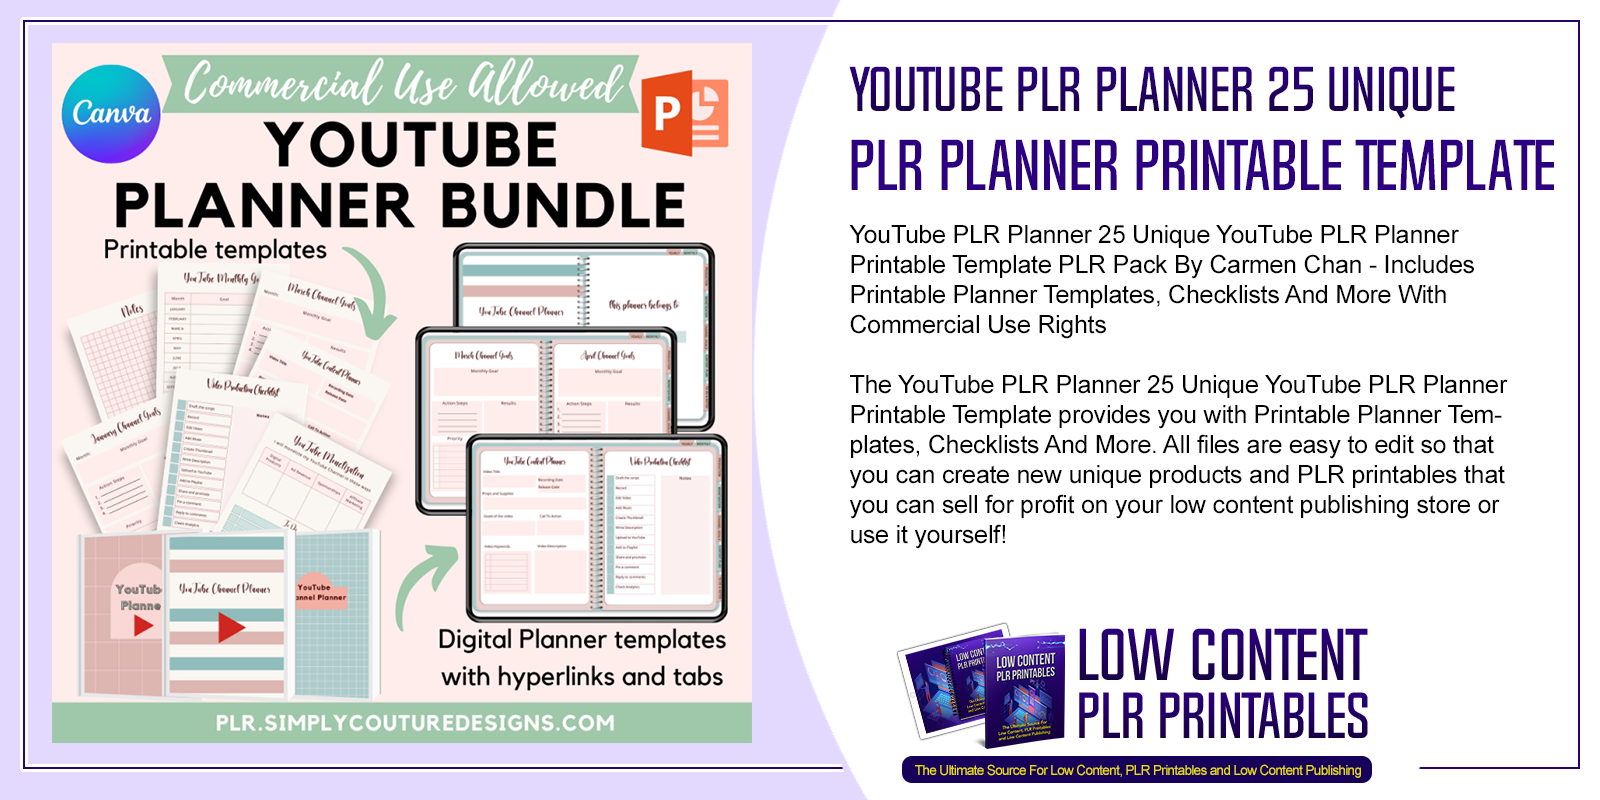 YouTube PLR Planner 25 Unique YouTube PLR Planner Printable Template